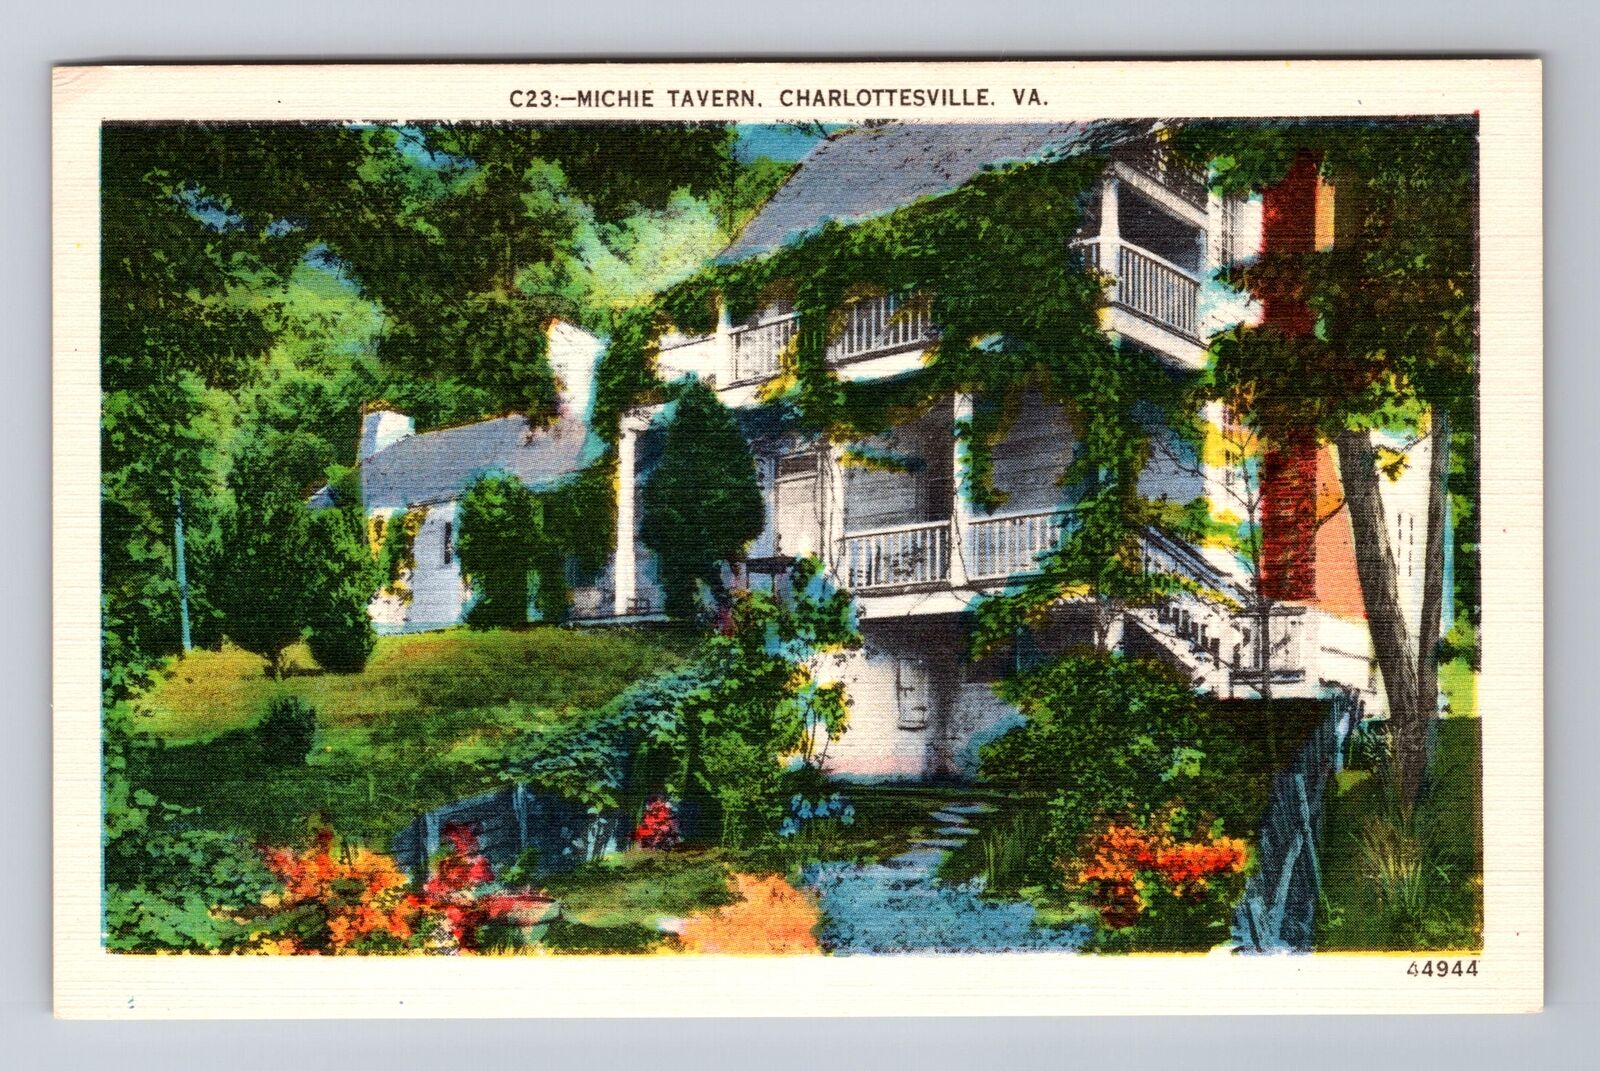 Charlottesville VA-Virginia, Michie Tavern, Advertising, Vintage Postcard